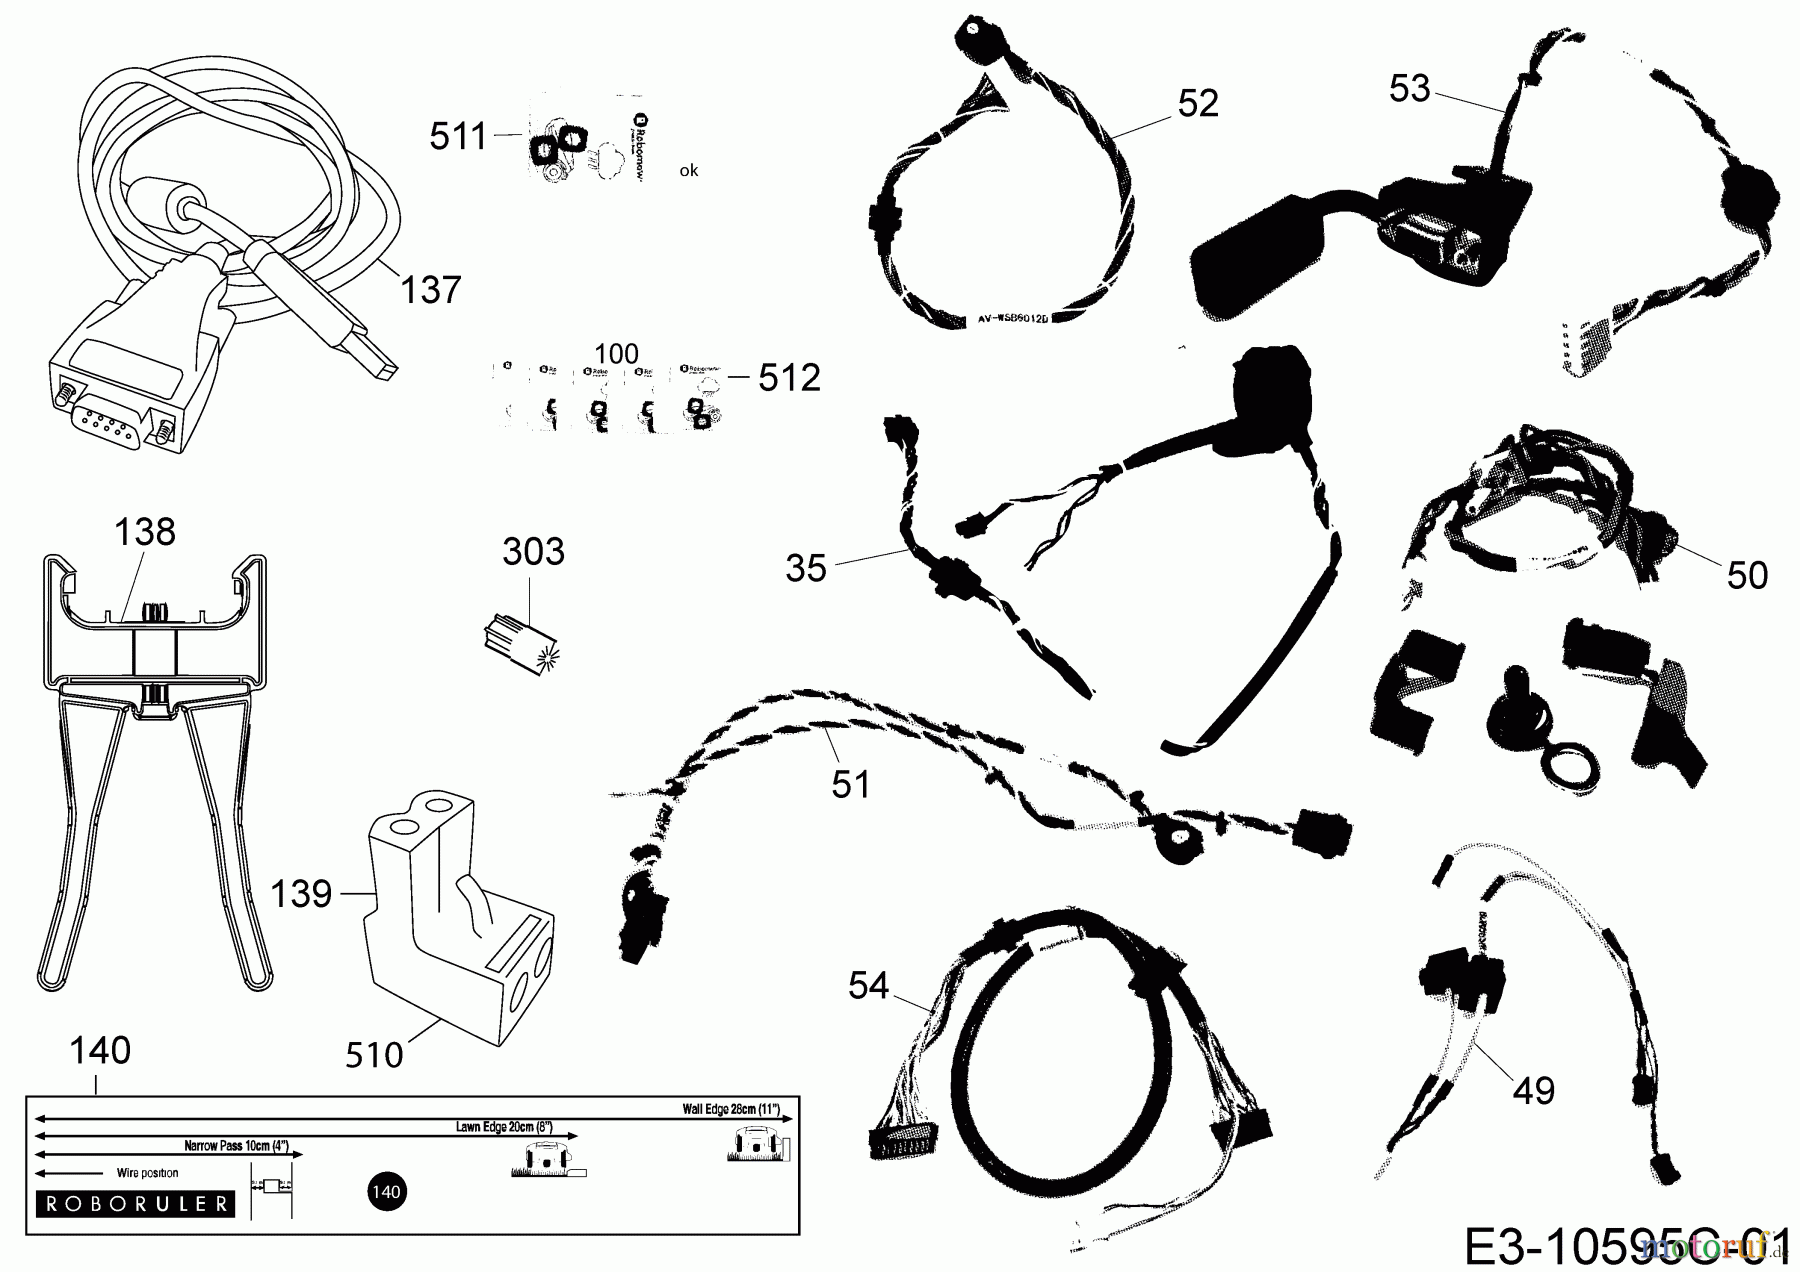  Robomow Mähroboter RS612 (White) PRD6100BW  (2015) Kabel, Kabelanschluß, Regensensor, Werkzeug